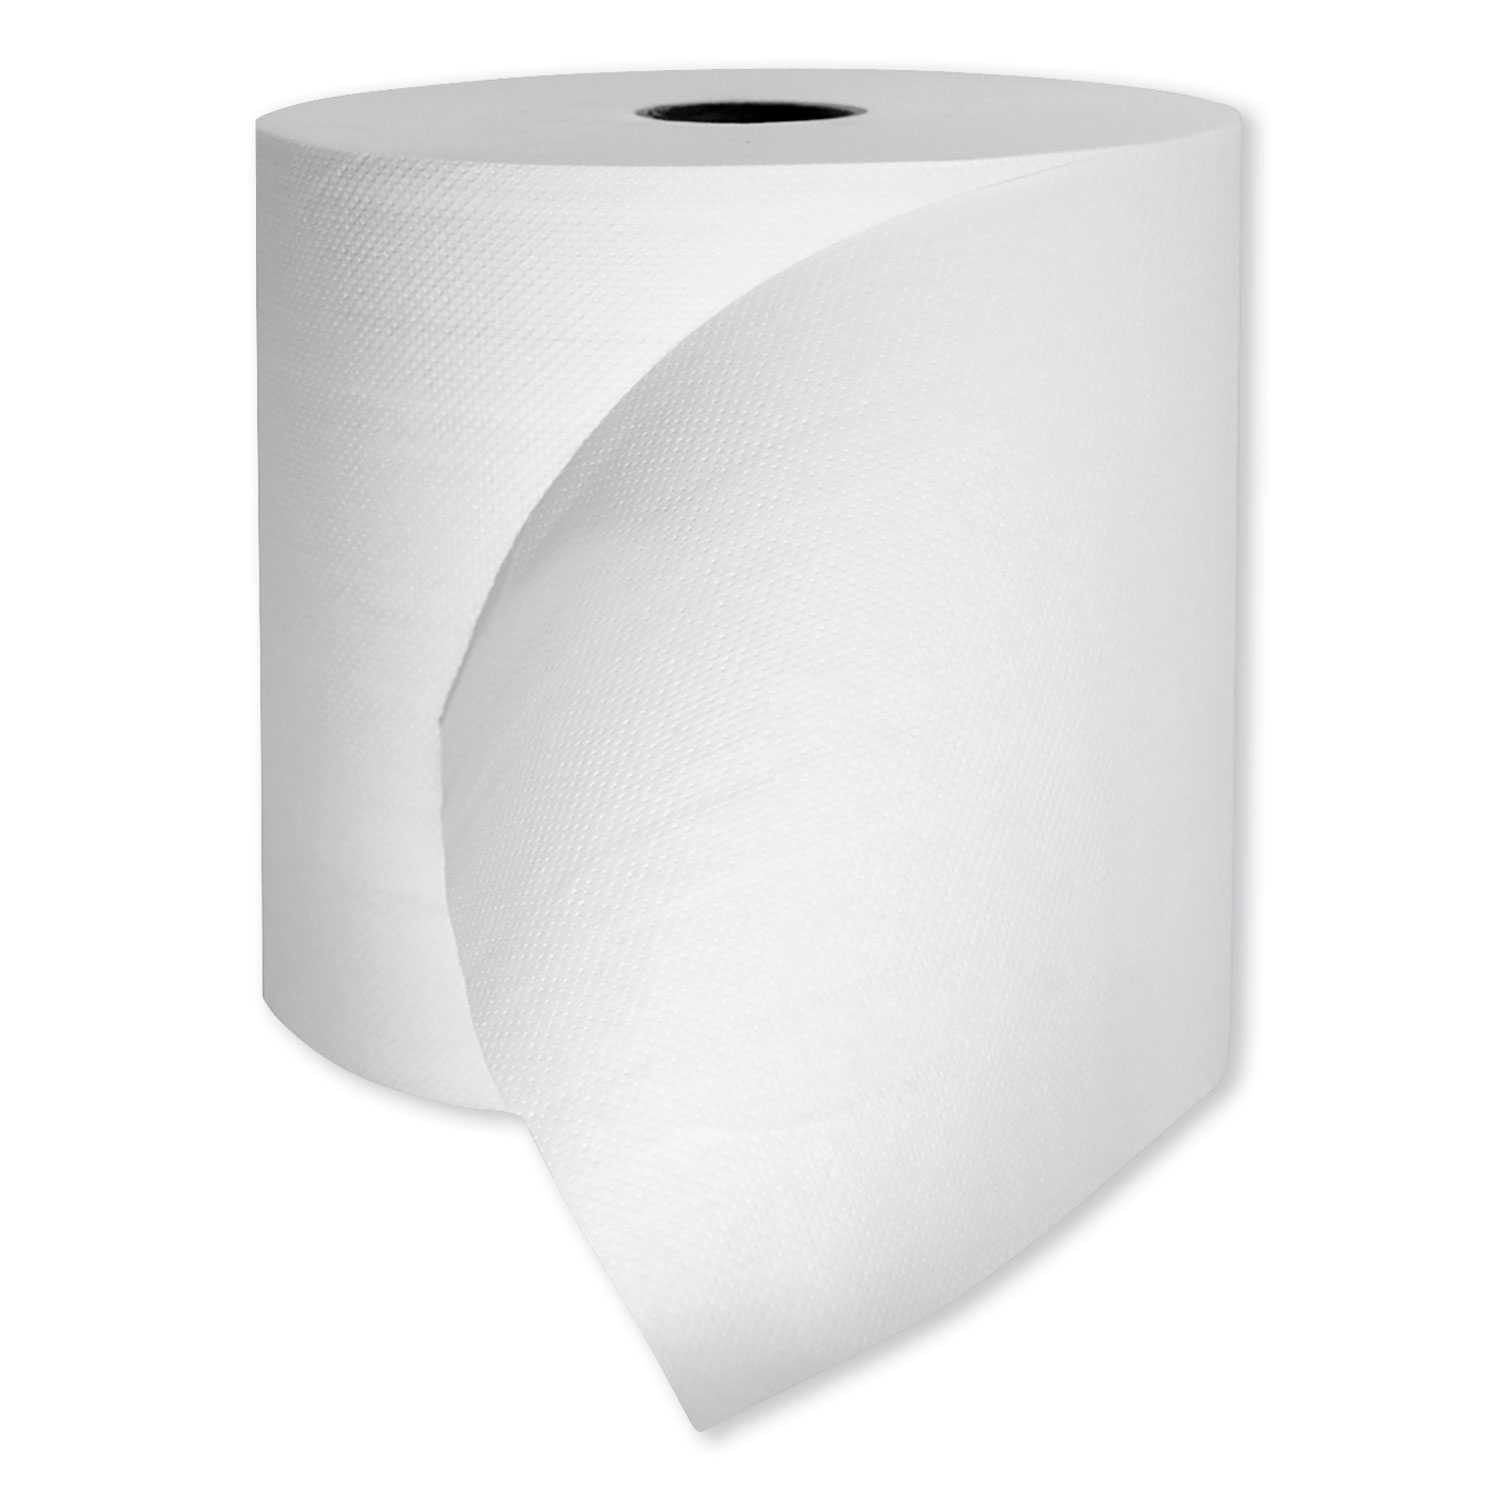  Morcon Tissue MOR 6700W Morsoft Universal Roll Towels, 1-Ply, 8 x 700 ft, White, 6 Rolls/Carton (MOR6700W) 